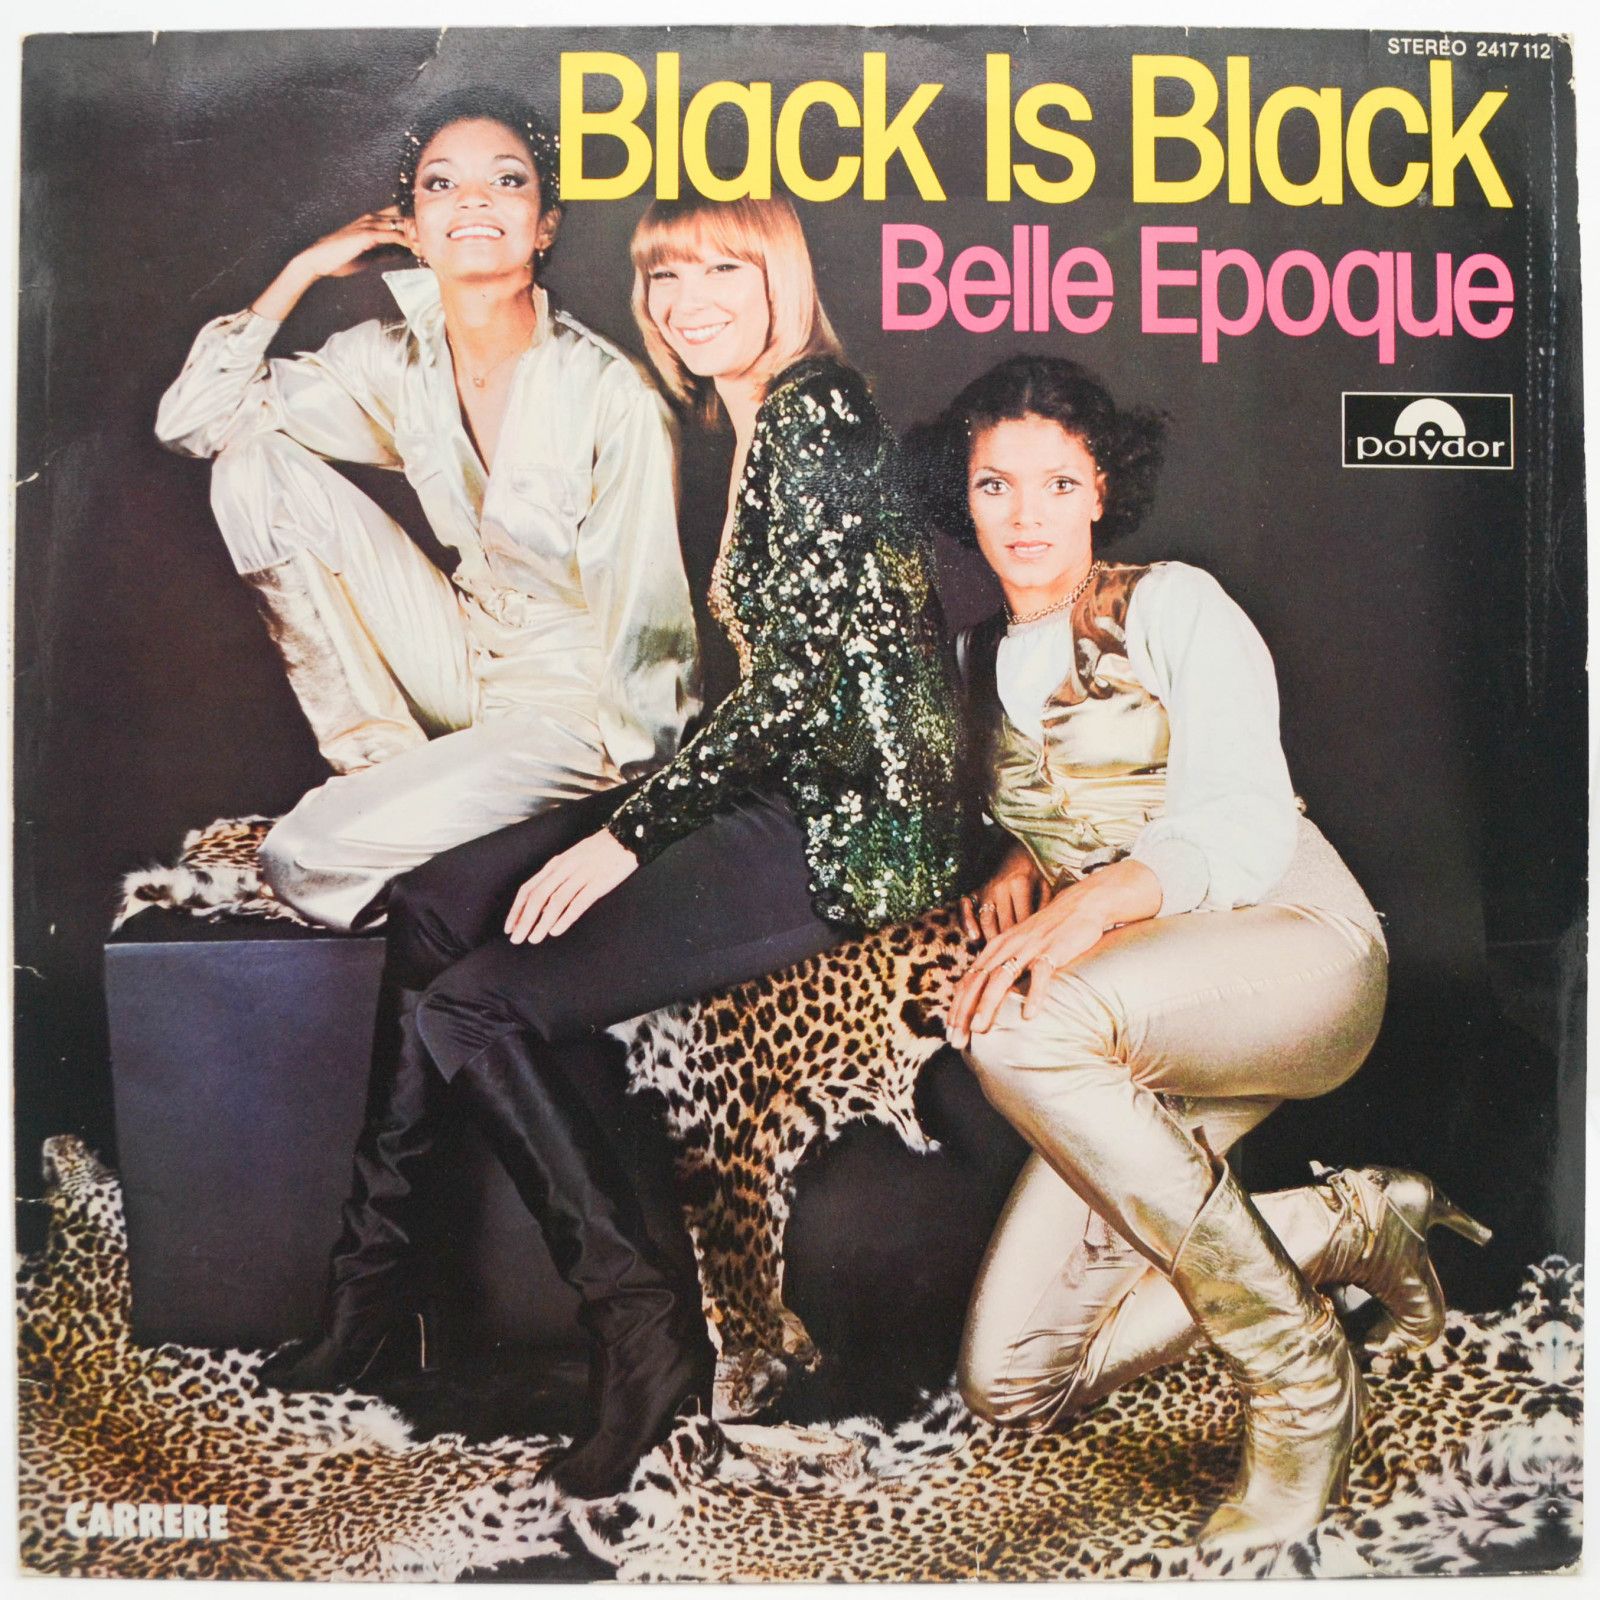 Belle Epoque — Black Is Black, 1977